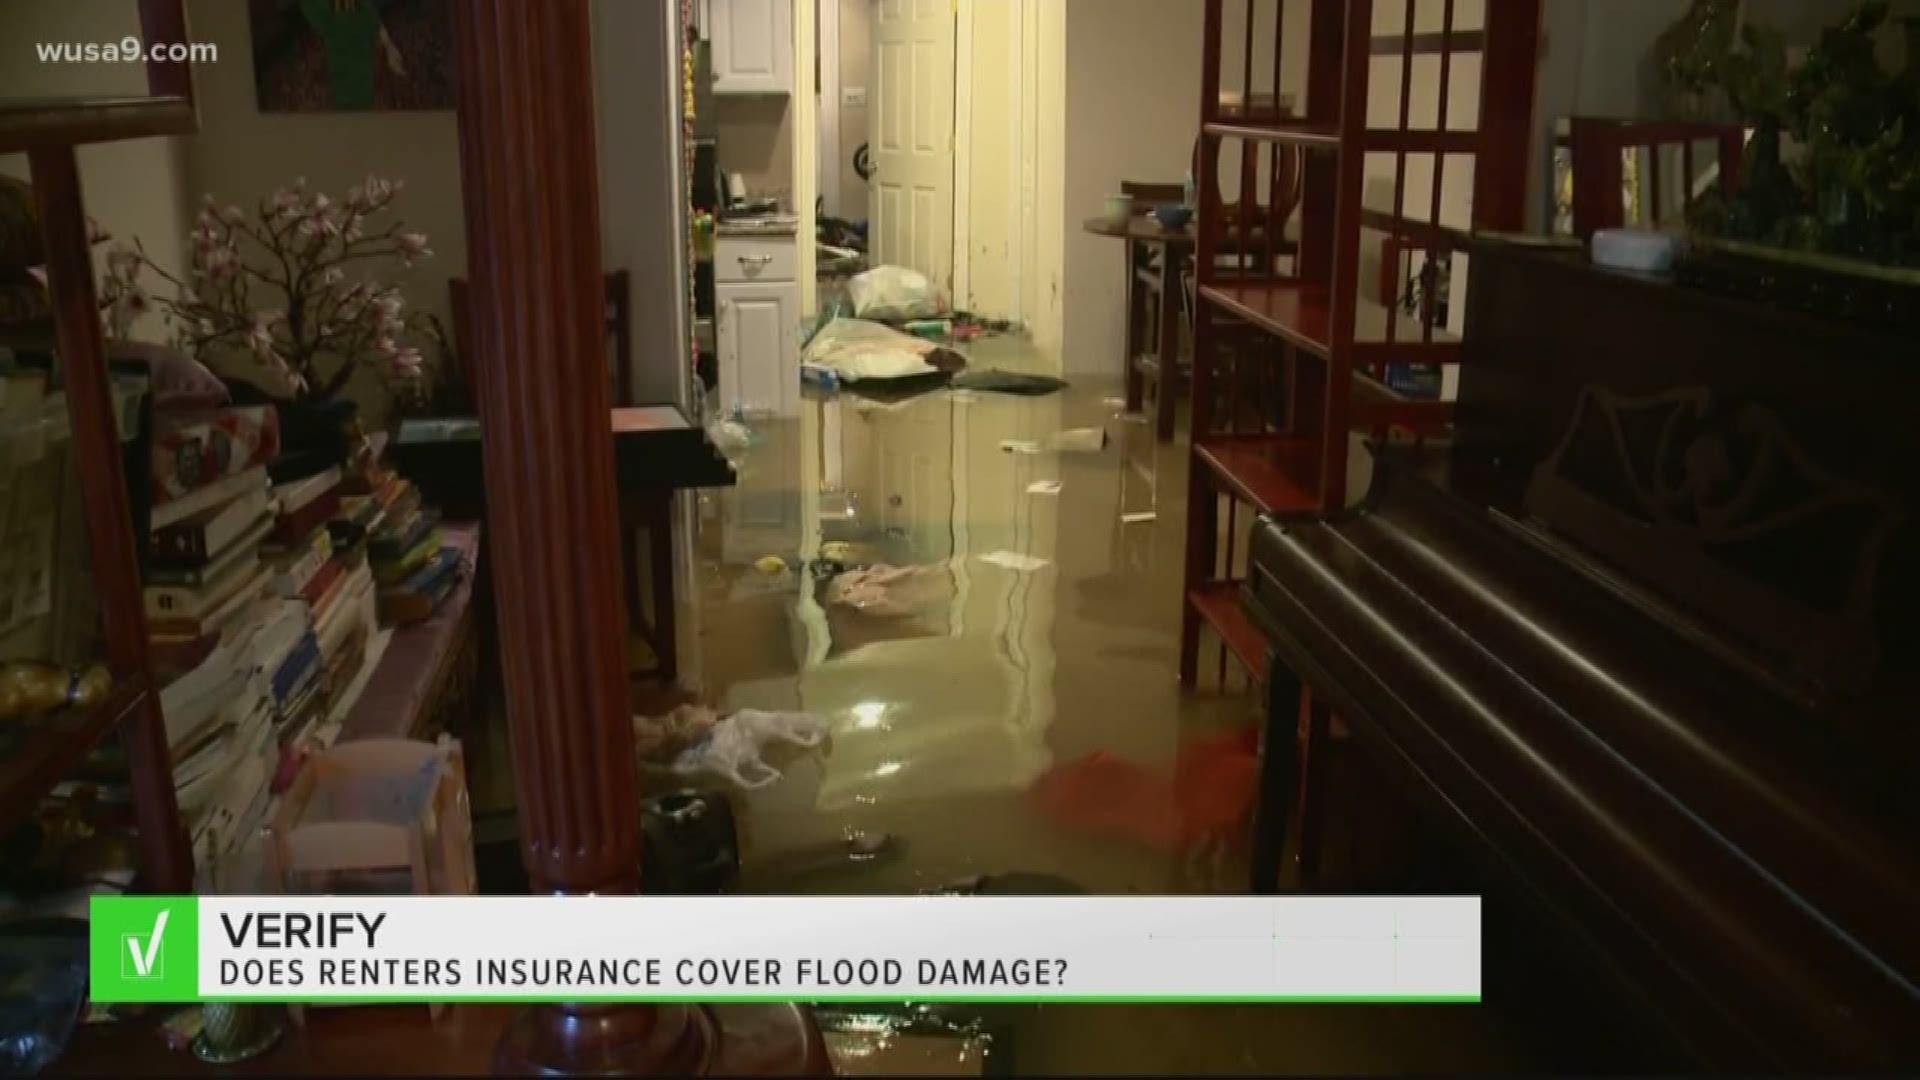 VERIFY Does renters insurance cover flood damage?